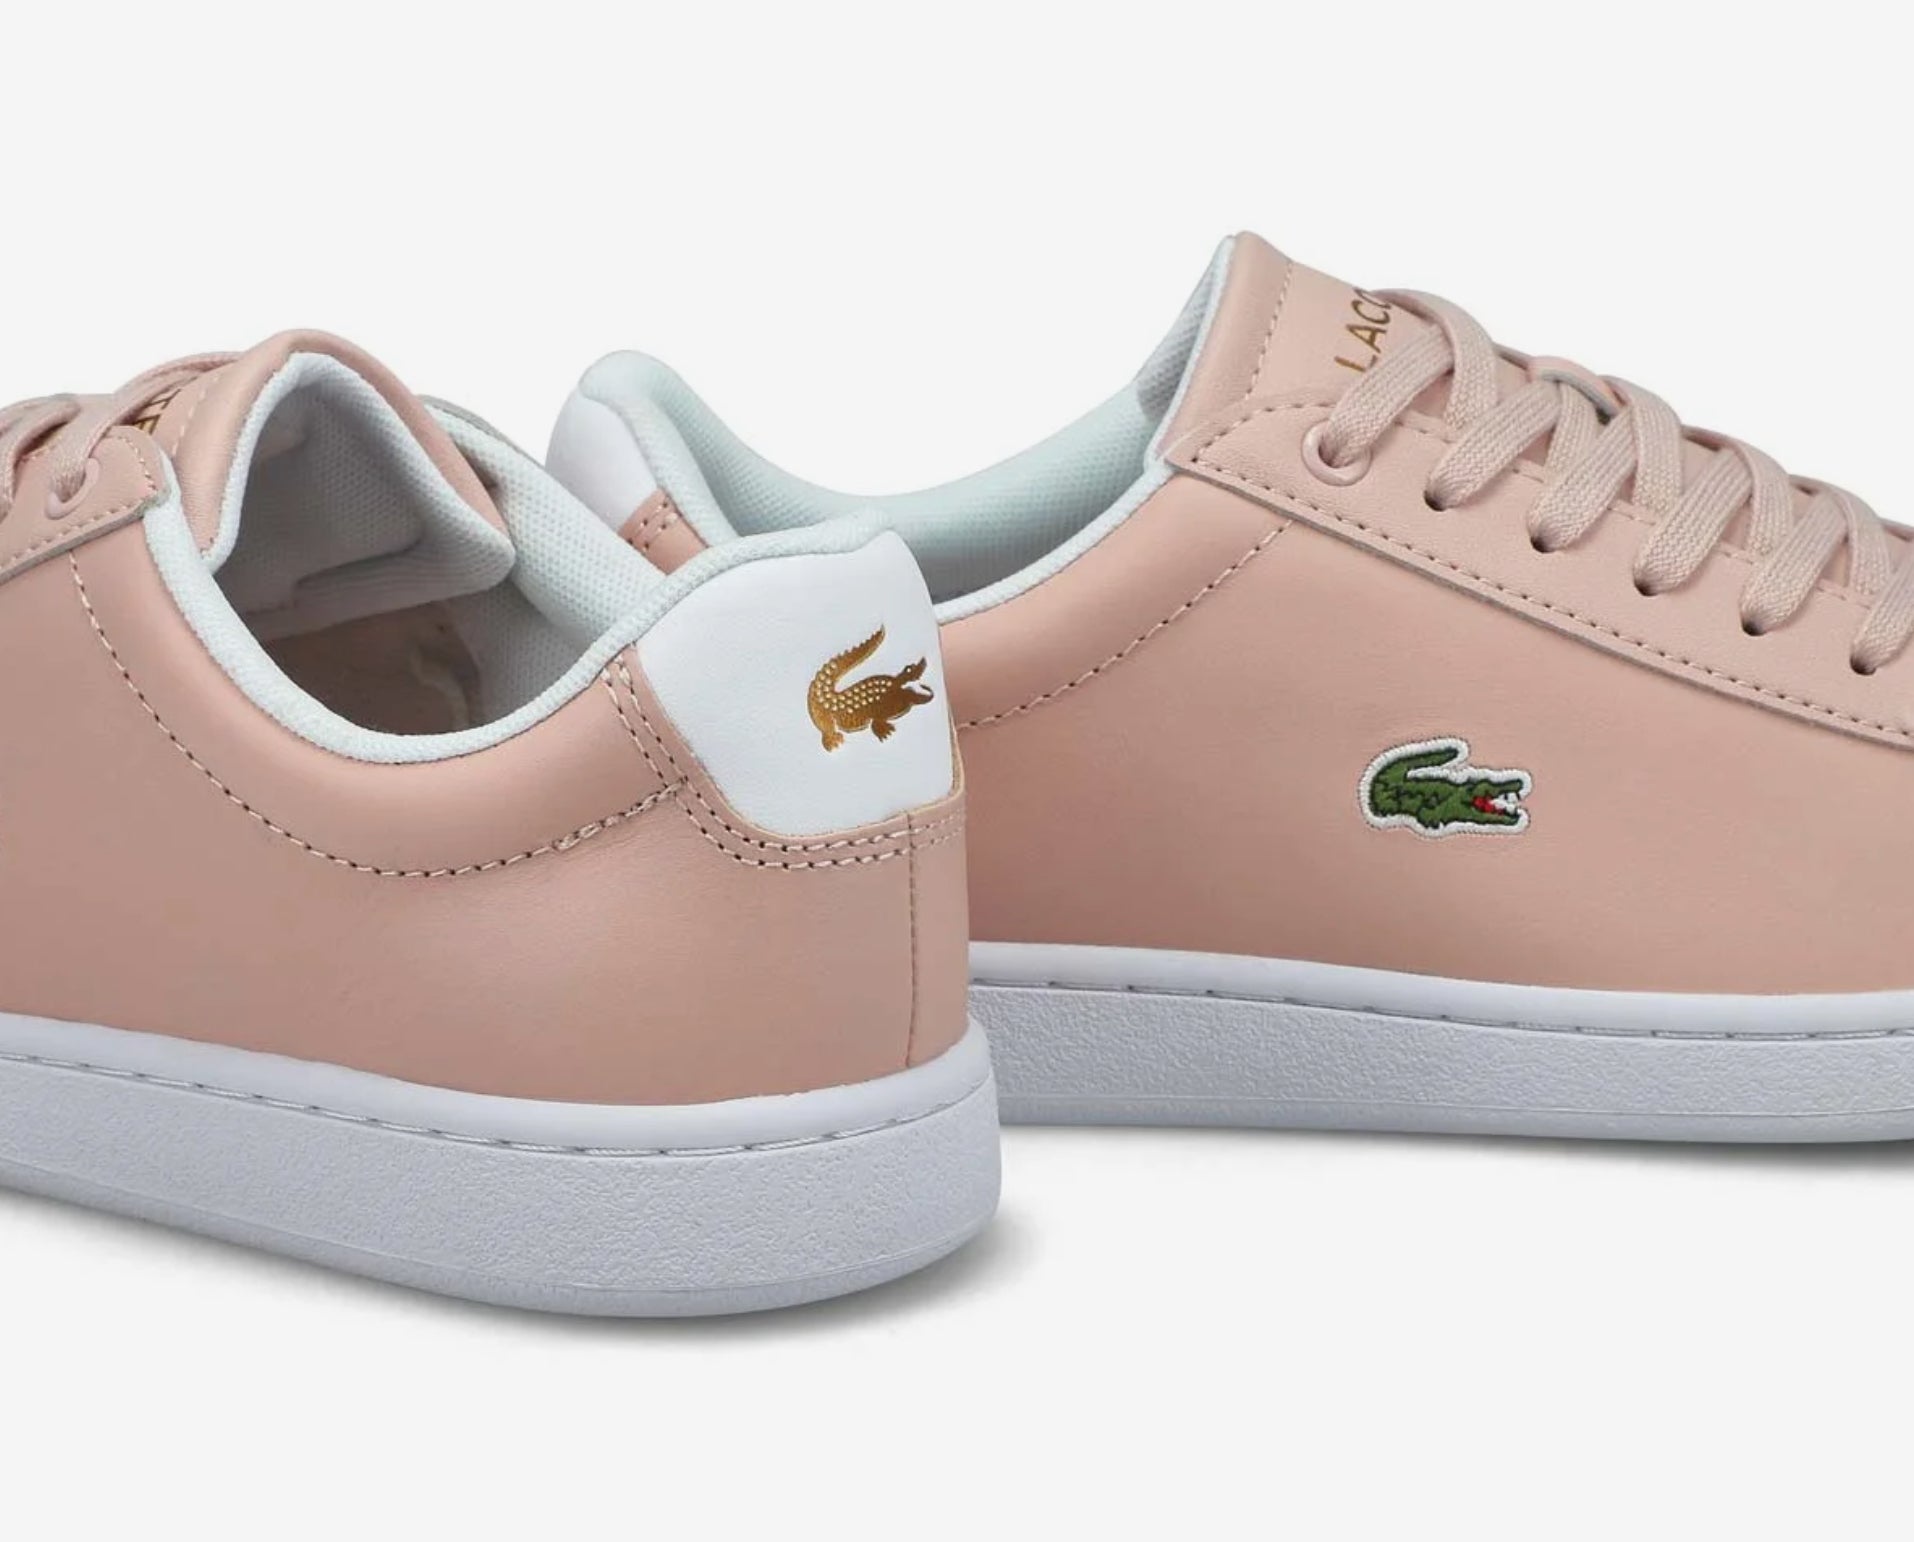 Lacoste Women’s Sneaker Hyde’s 319 1 P Leather Light Pink/White